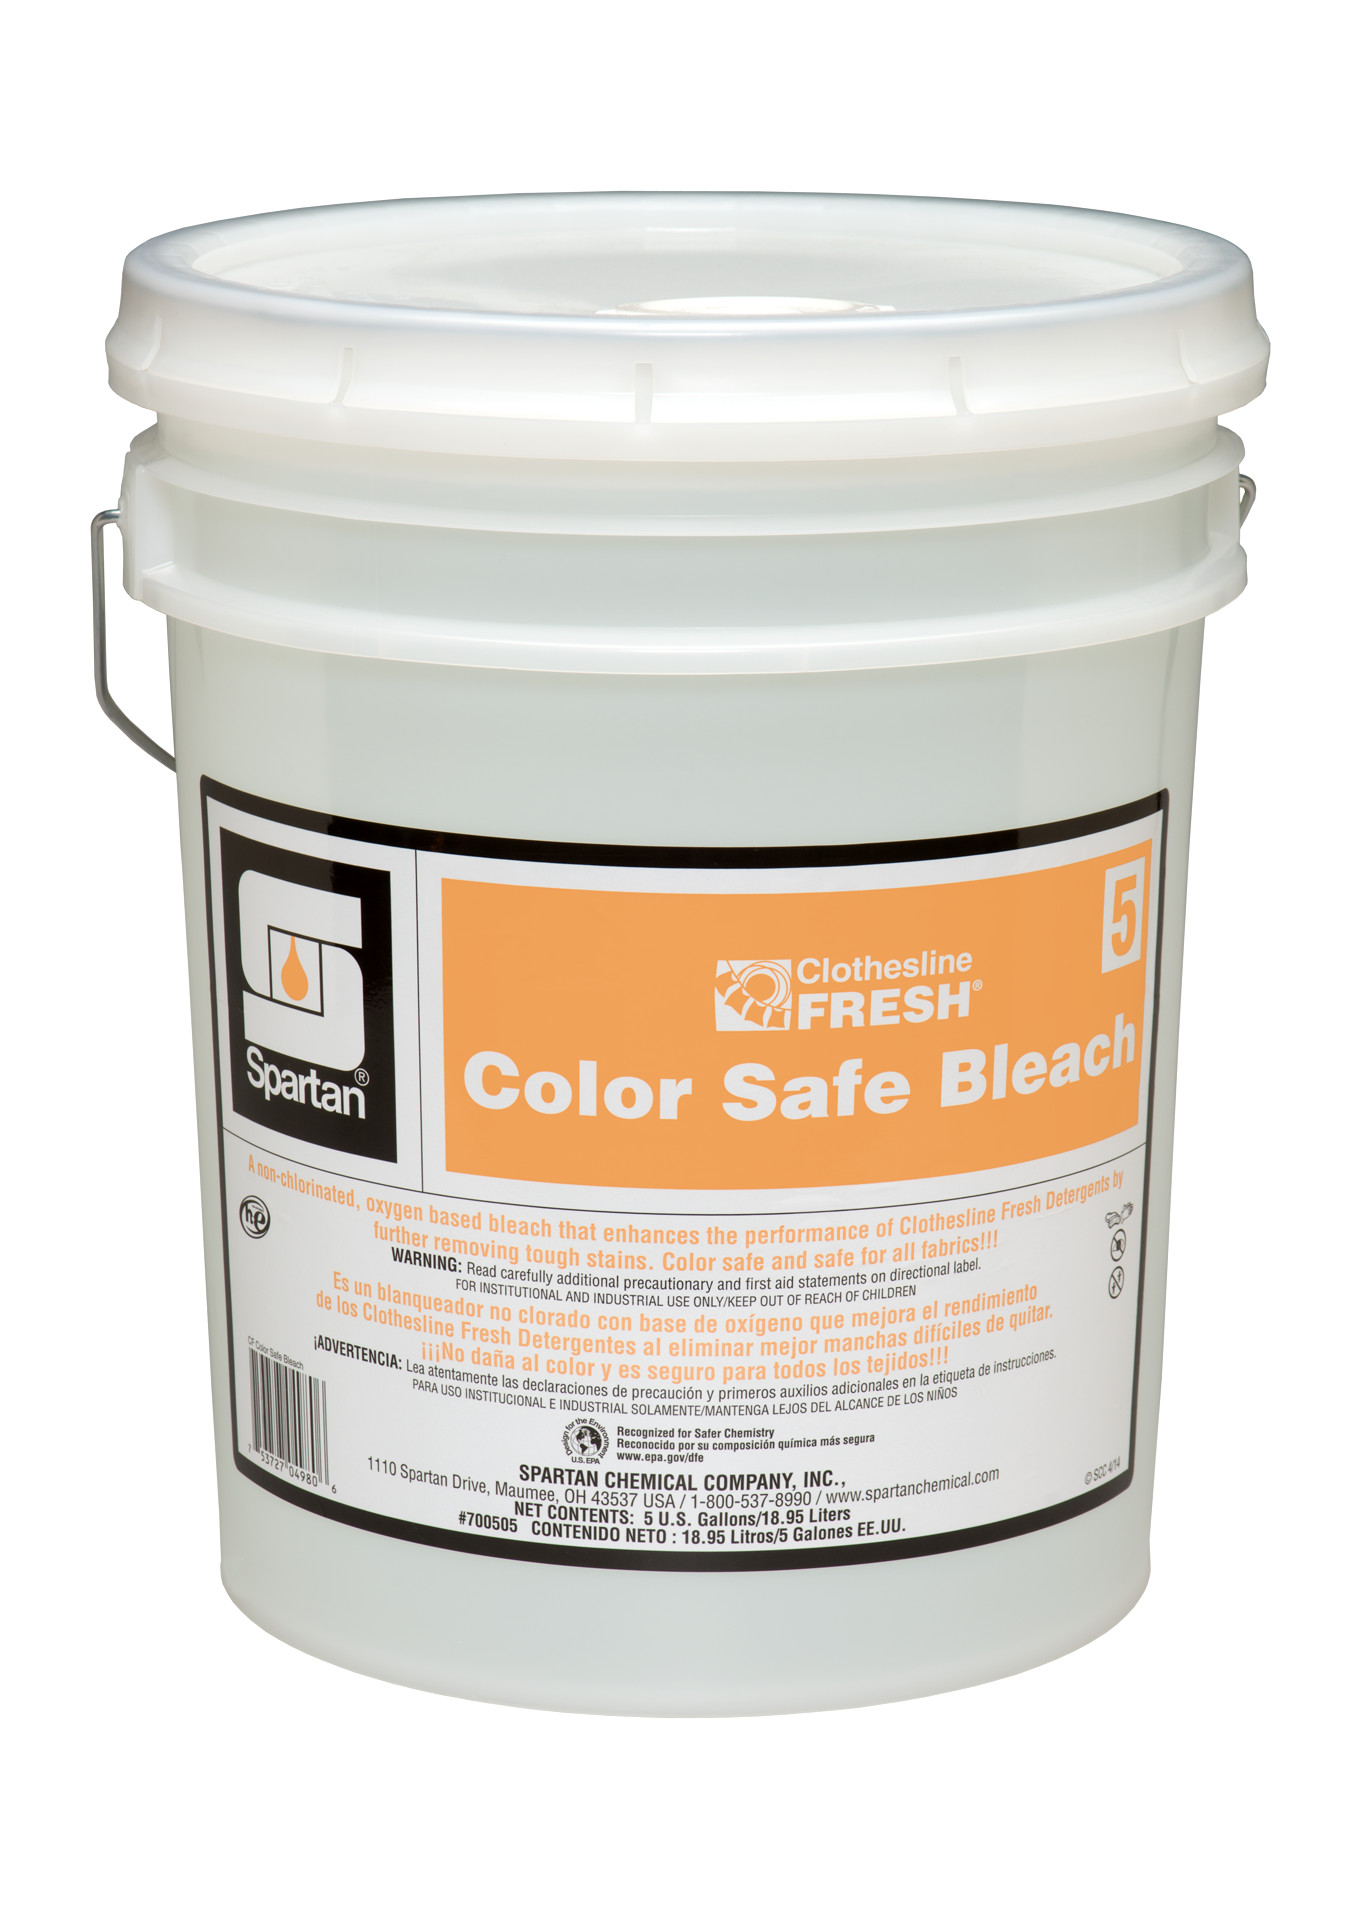 Spartan Chemical Company Clothesline Fresh Color Safe Bleach 5, 5 GAL PAIL